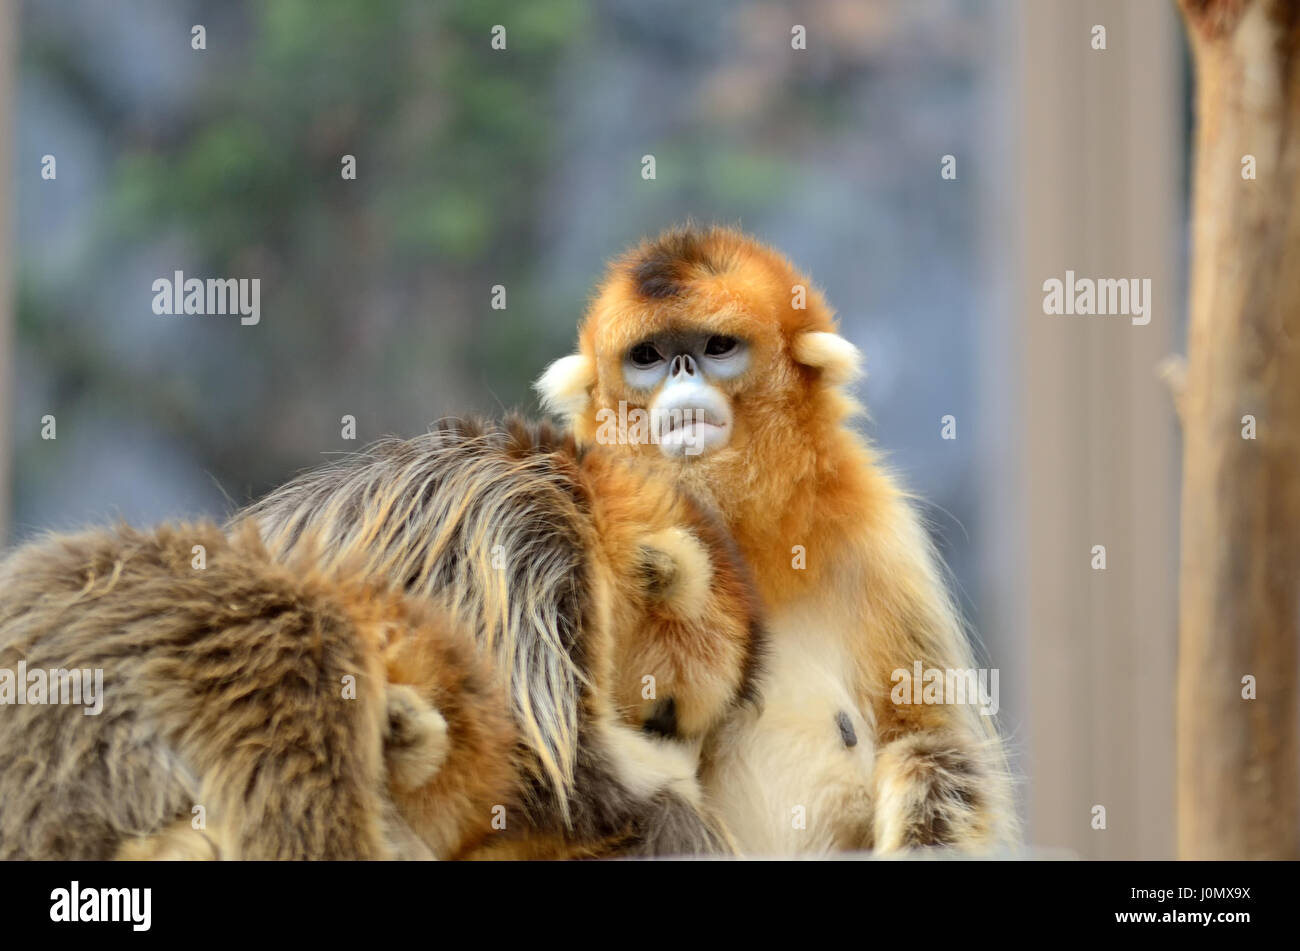 Golden snub-nosed monkey selective focus Banque D'Images